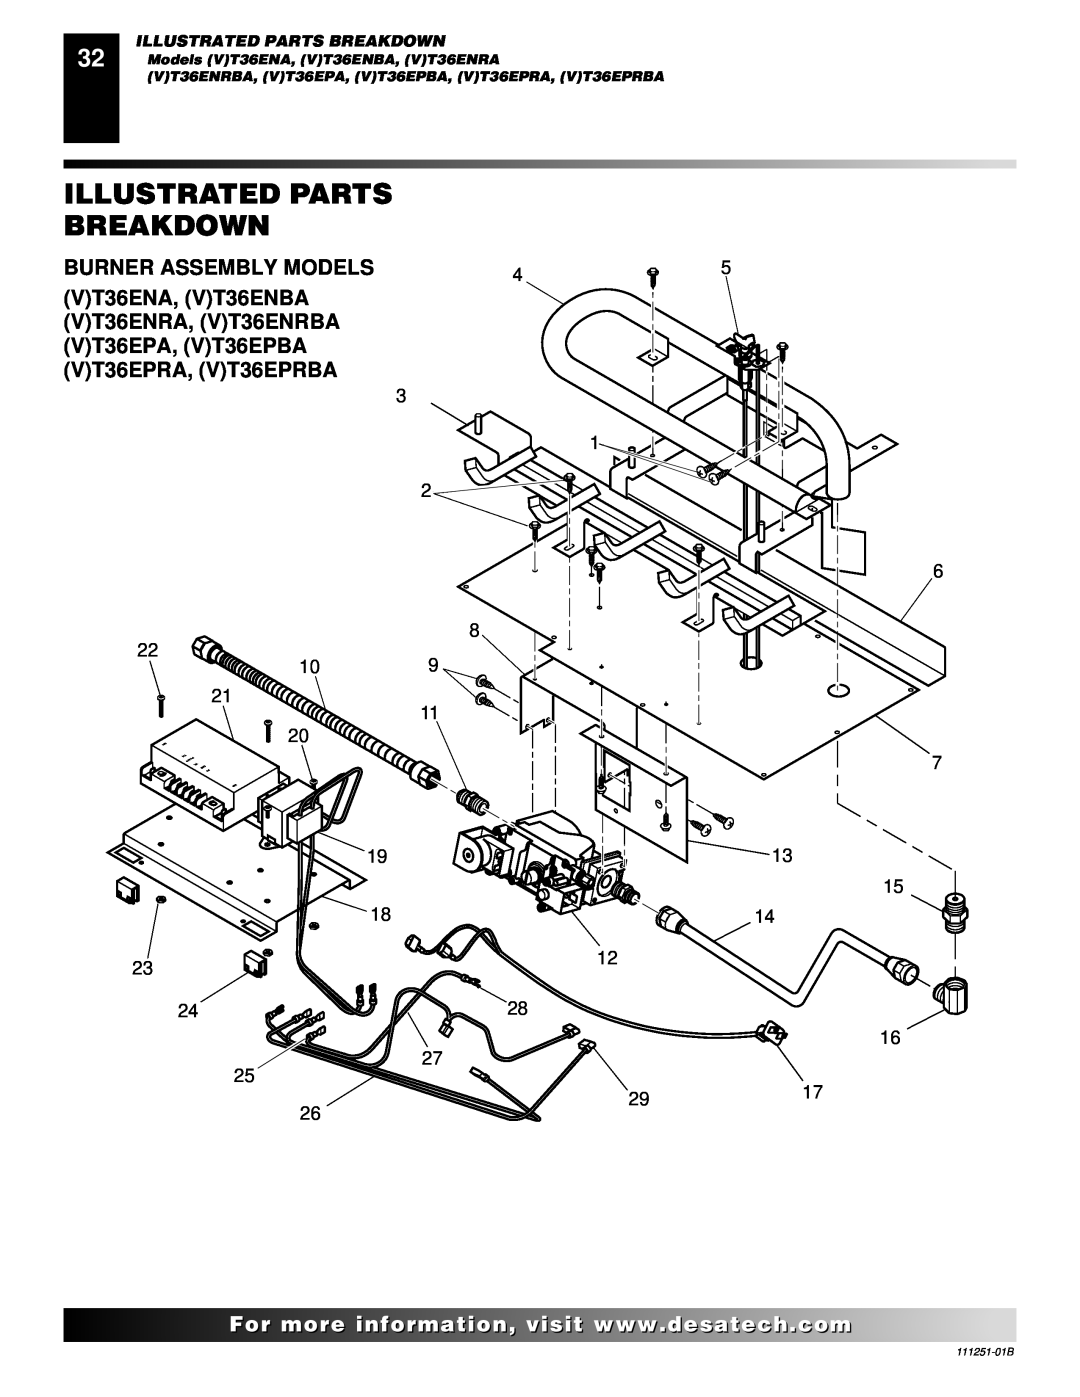 Desa (V)T36ENA installation manual Illustrated Parts Breakdown, Burner Assembly Models, Models VT36ENA, VT36ENBA, VT36ENRA 